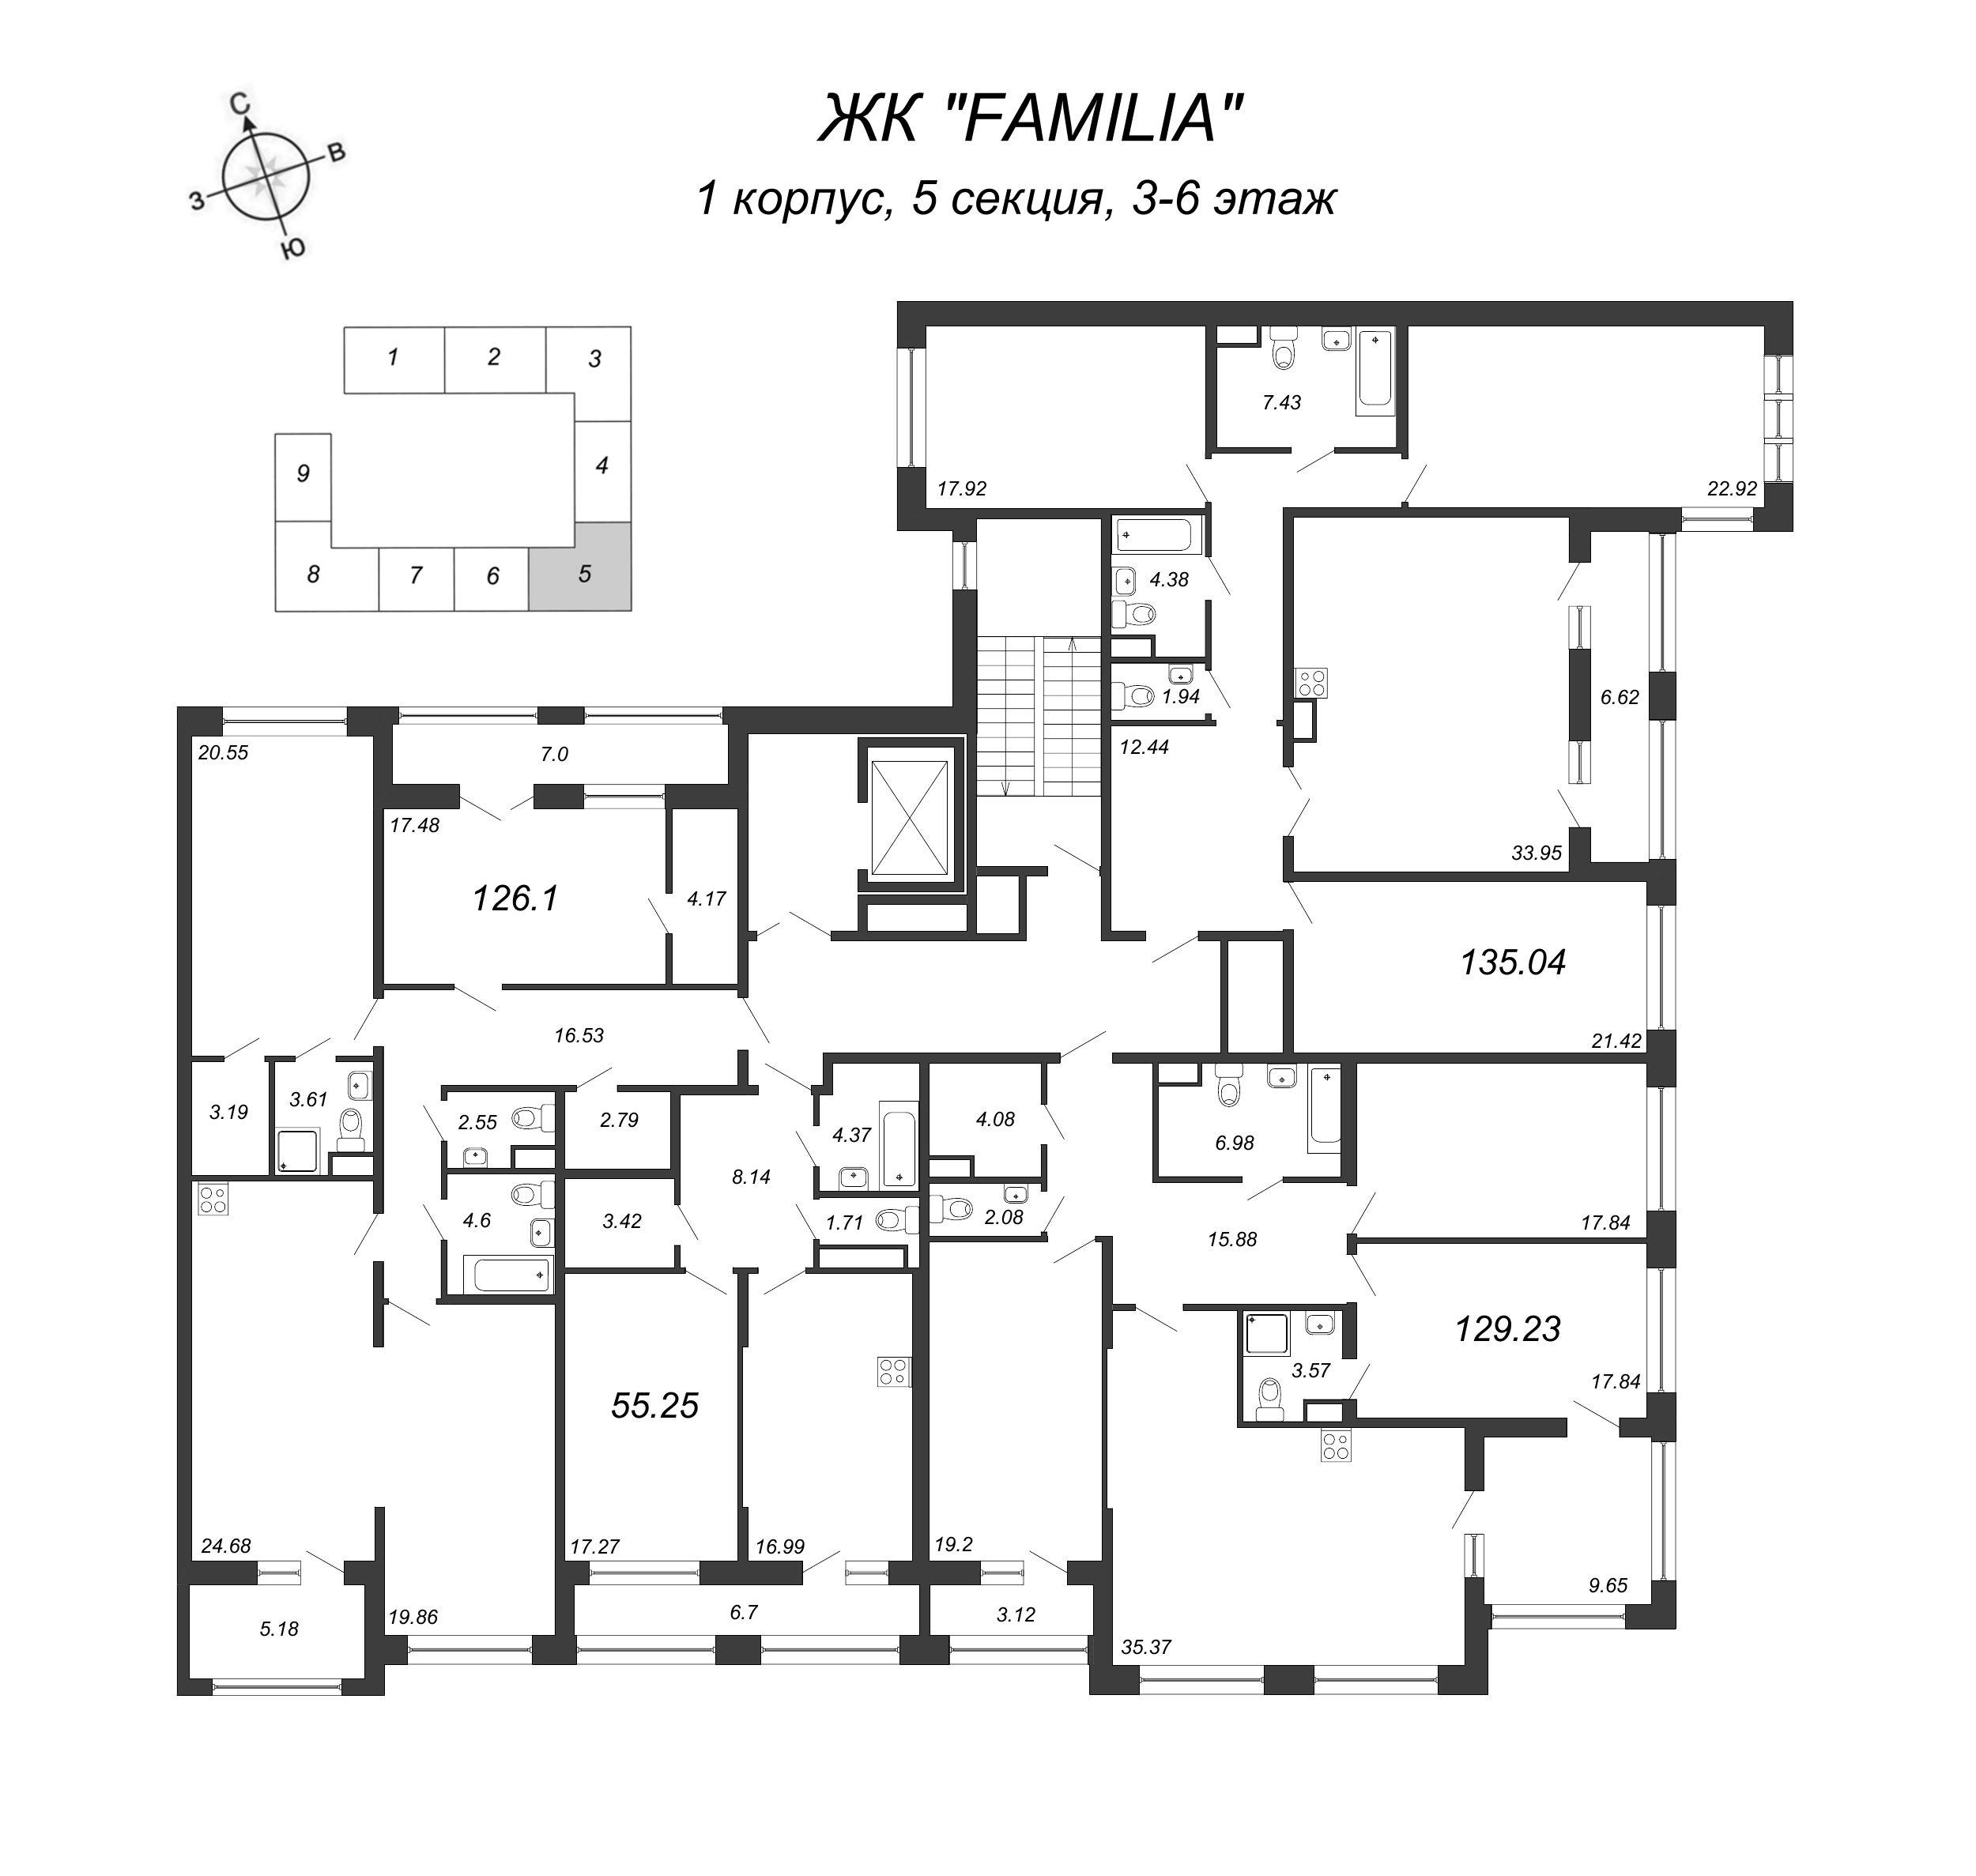 4-комнатная (Евро) квартира, 128.8 м² в ЖК "FAMILIA" - планировка этажа